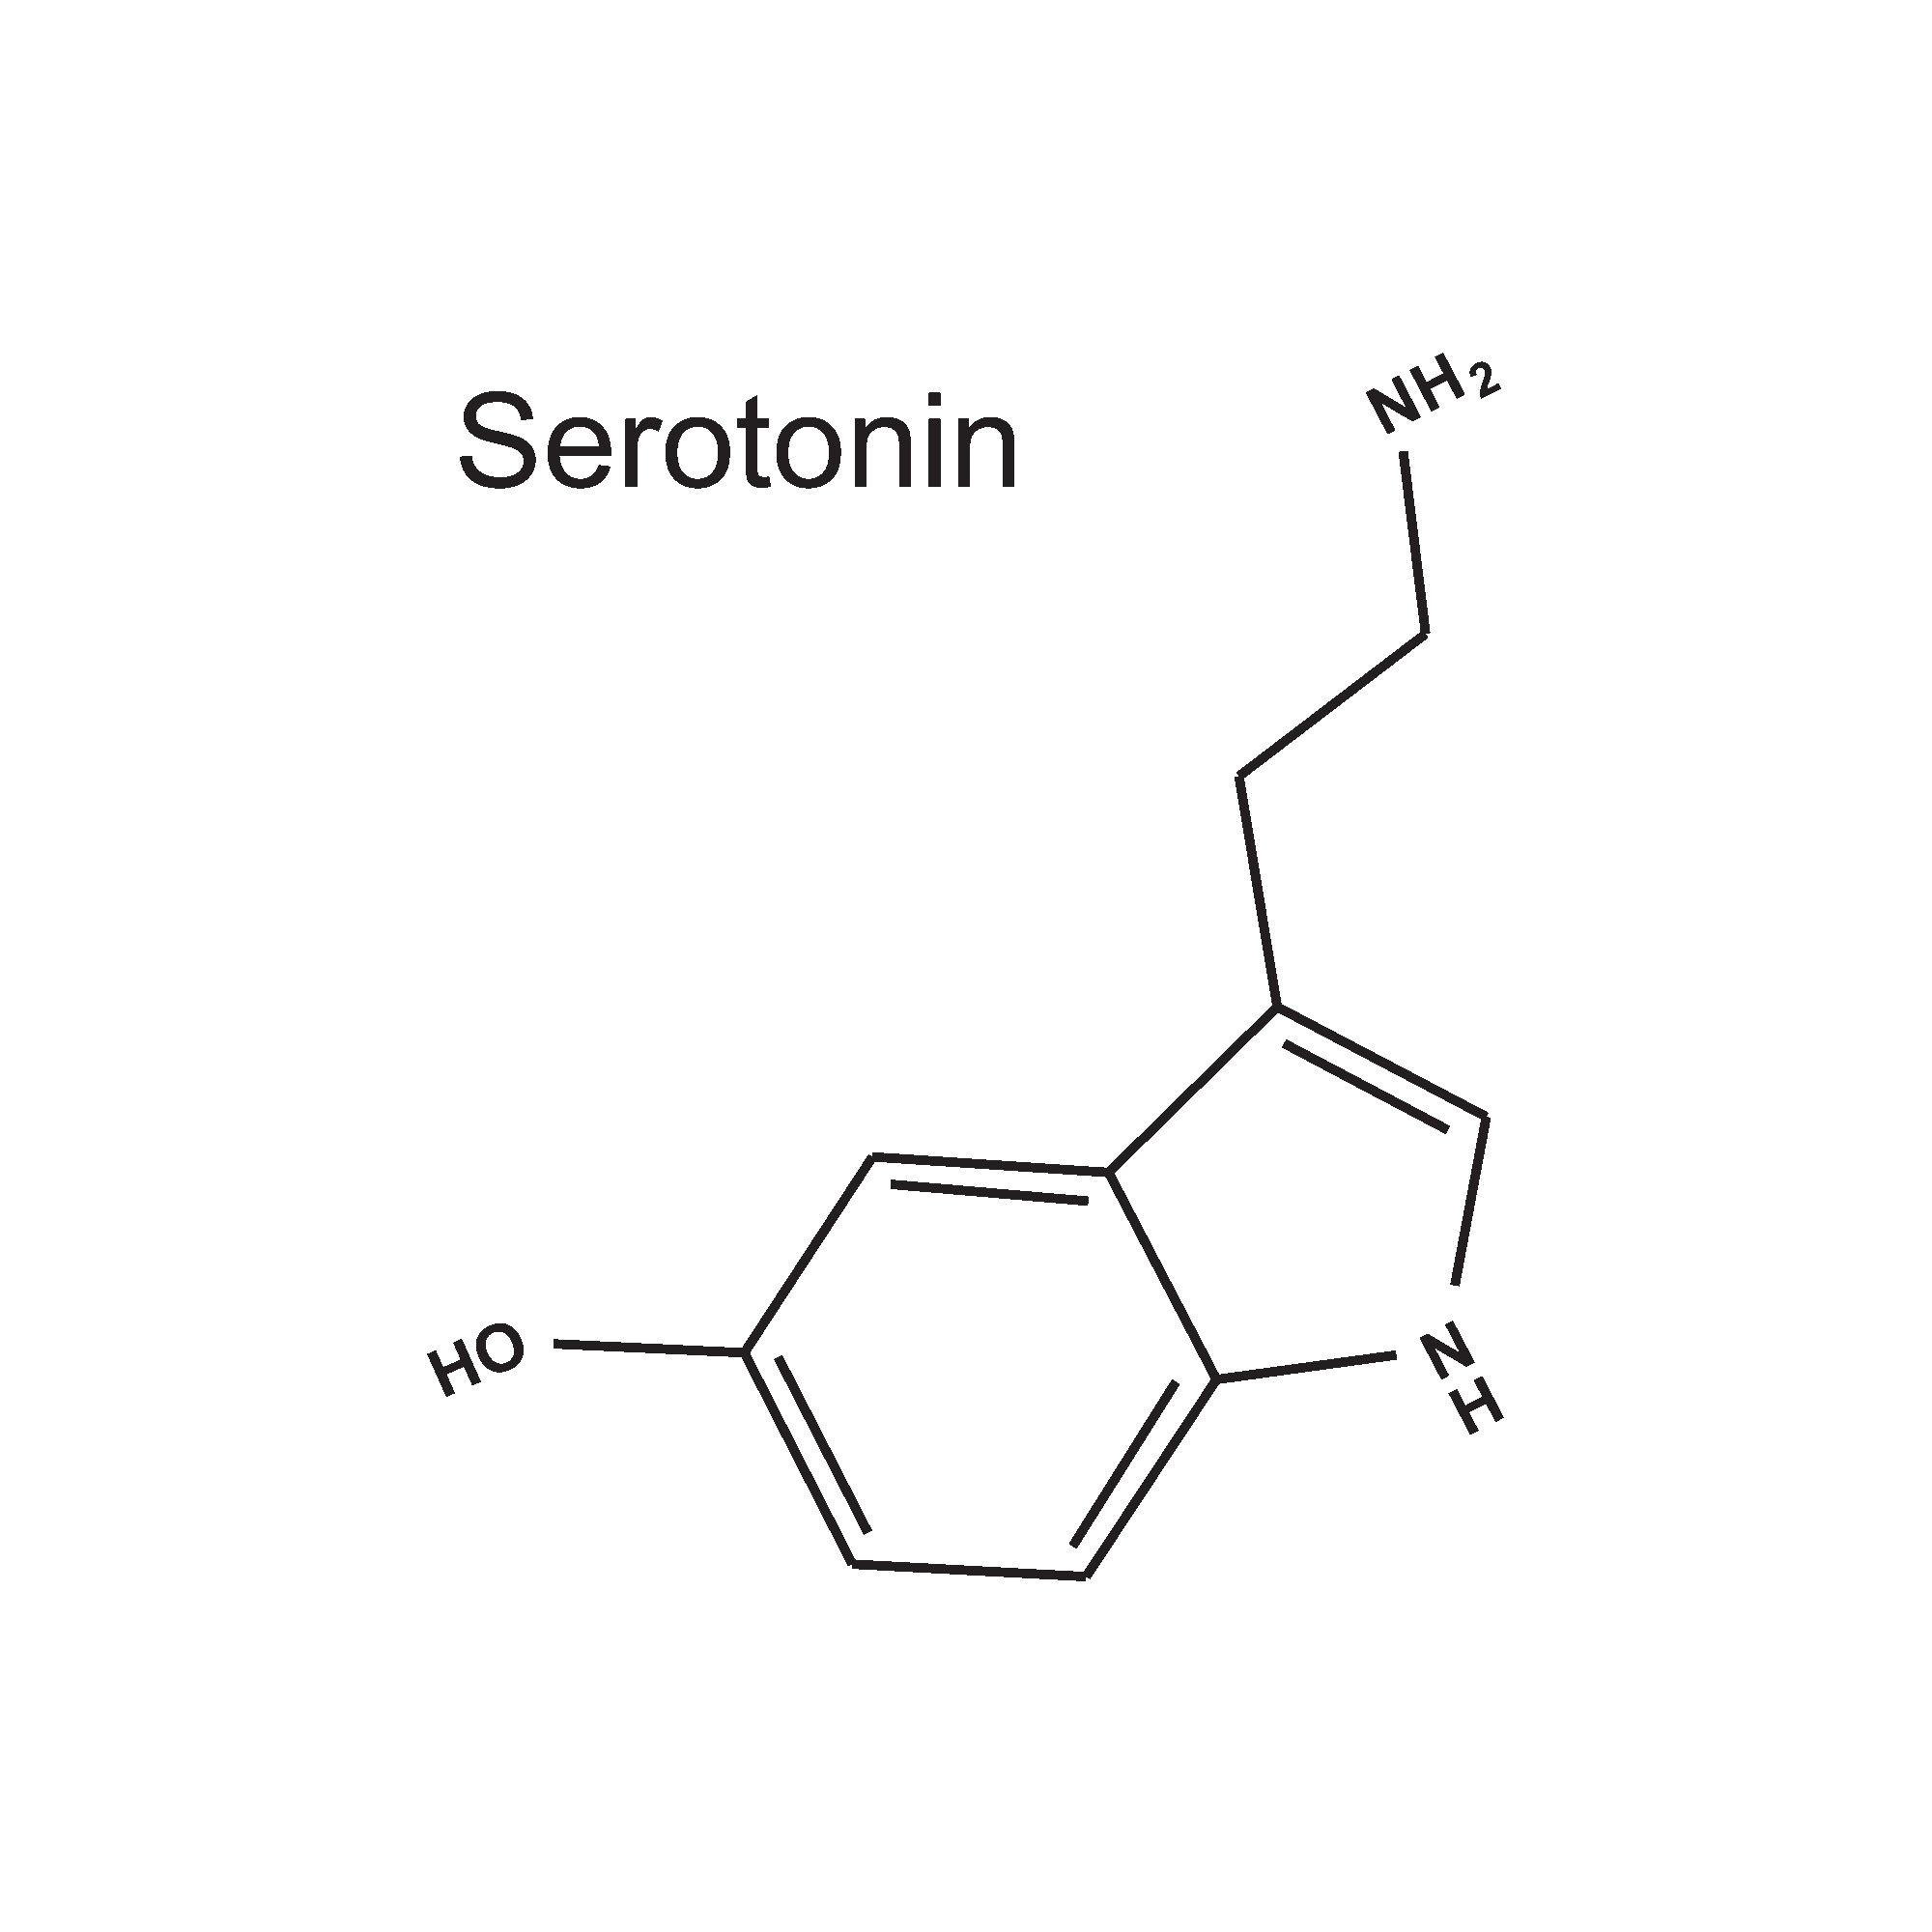 minimalist tattoo of serotonin formula on Craiyon